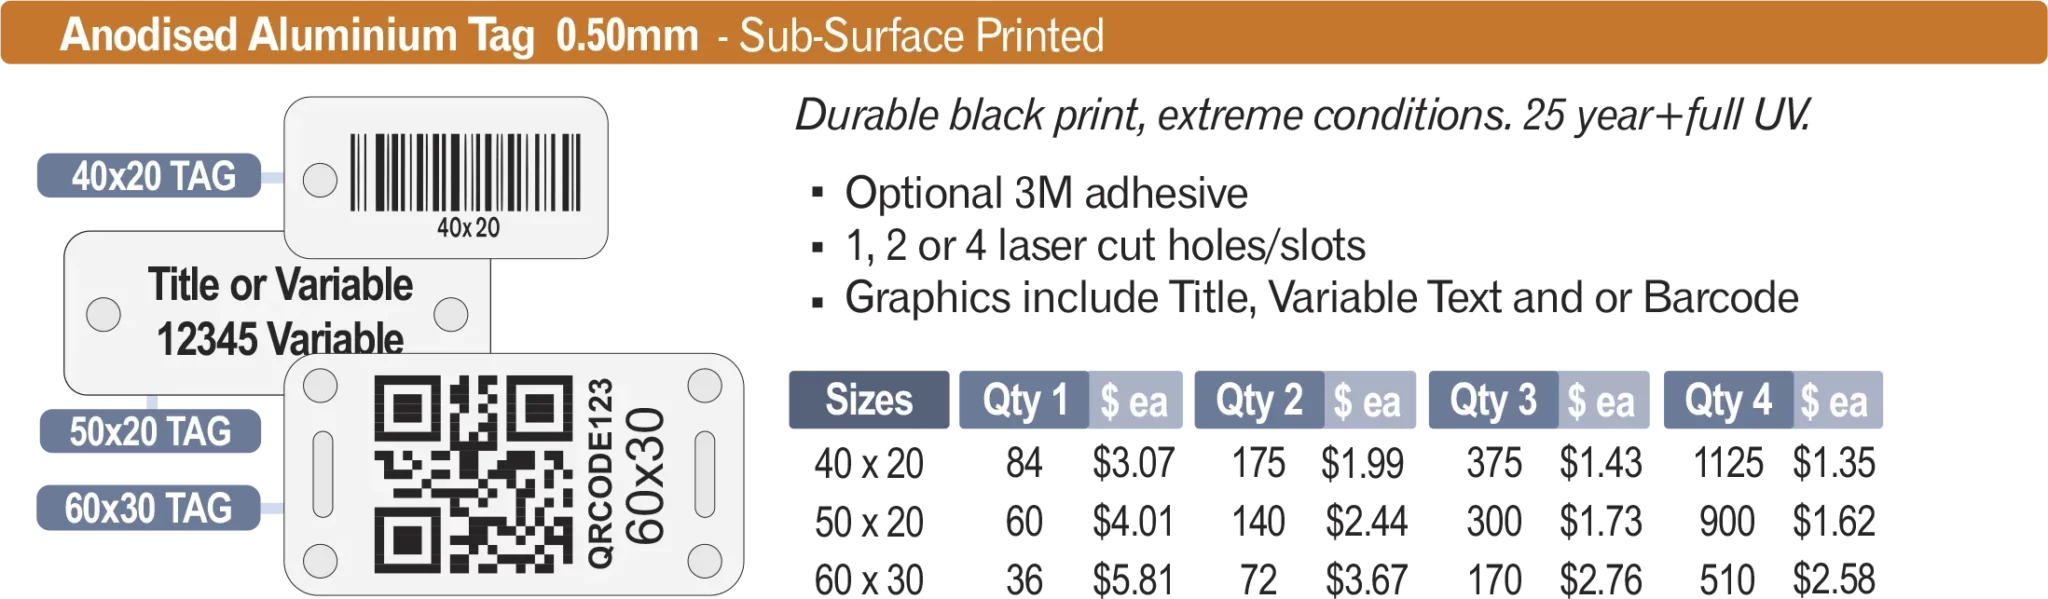 Anodised Aluminium Tag 0.50mm - Sub-Surface Printed